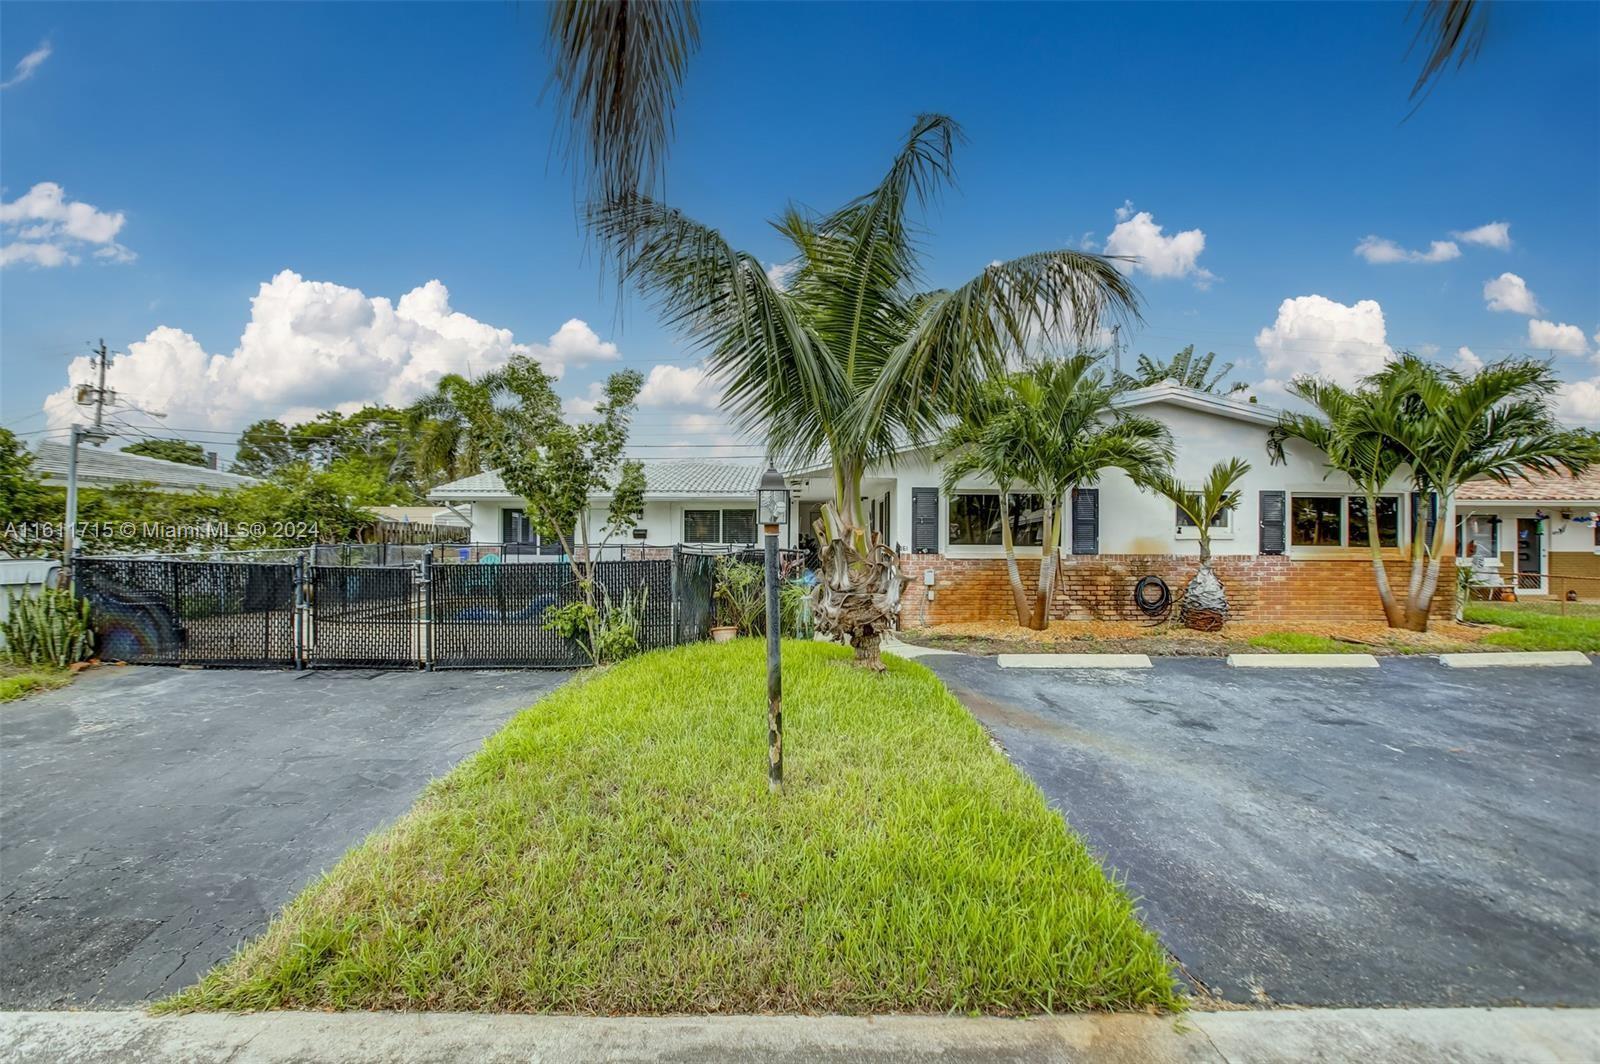 Rental Property at 461 Se 1st Ave, Pompano Beach, Broward County, Florida -  - $978,000 MO.